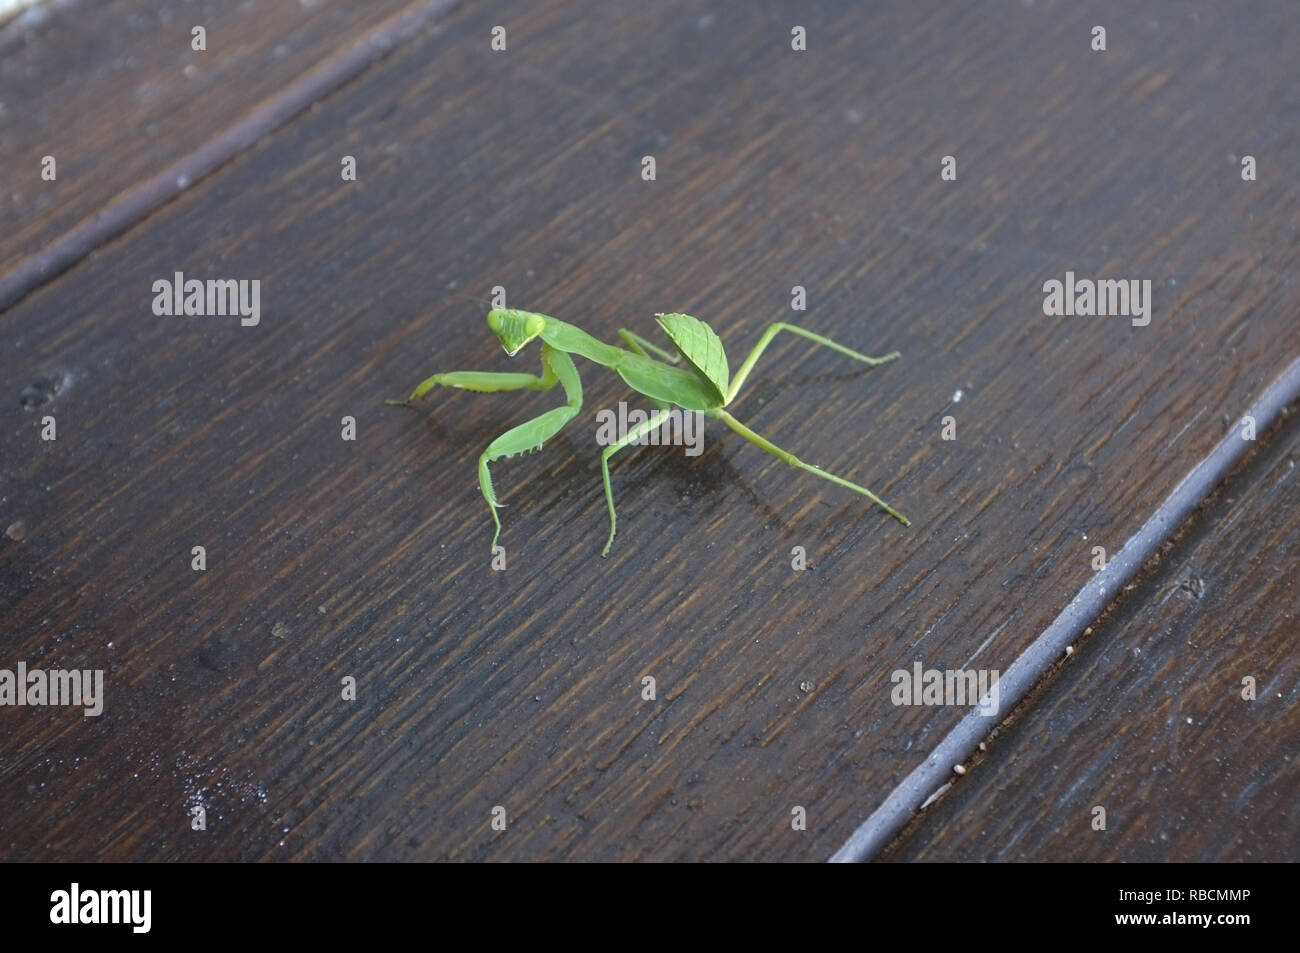 Focus of Preying Mantis Mantid Mantises on wooden floor. Stock Photo